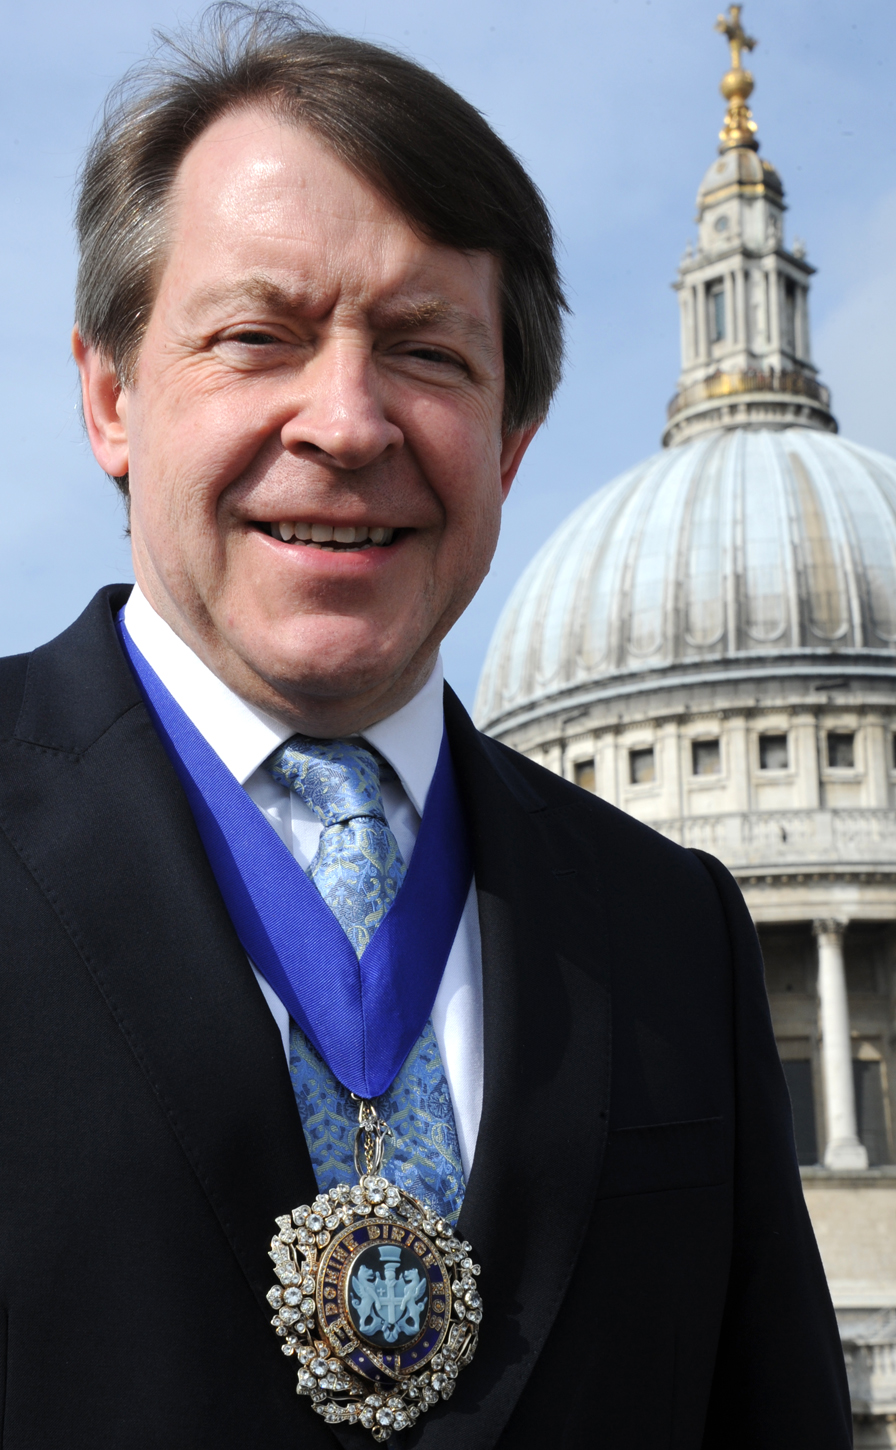 Lord Mayor of London Roger Gifford